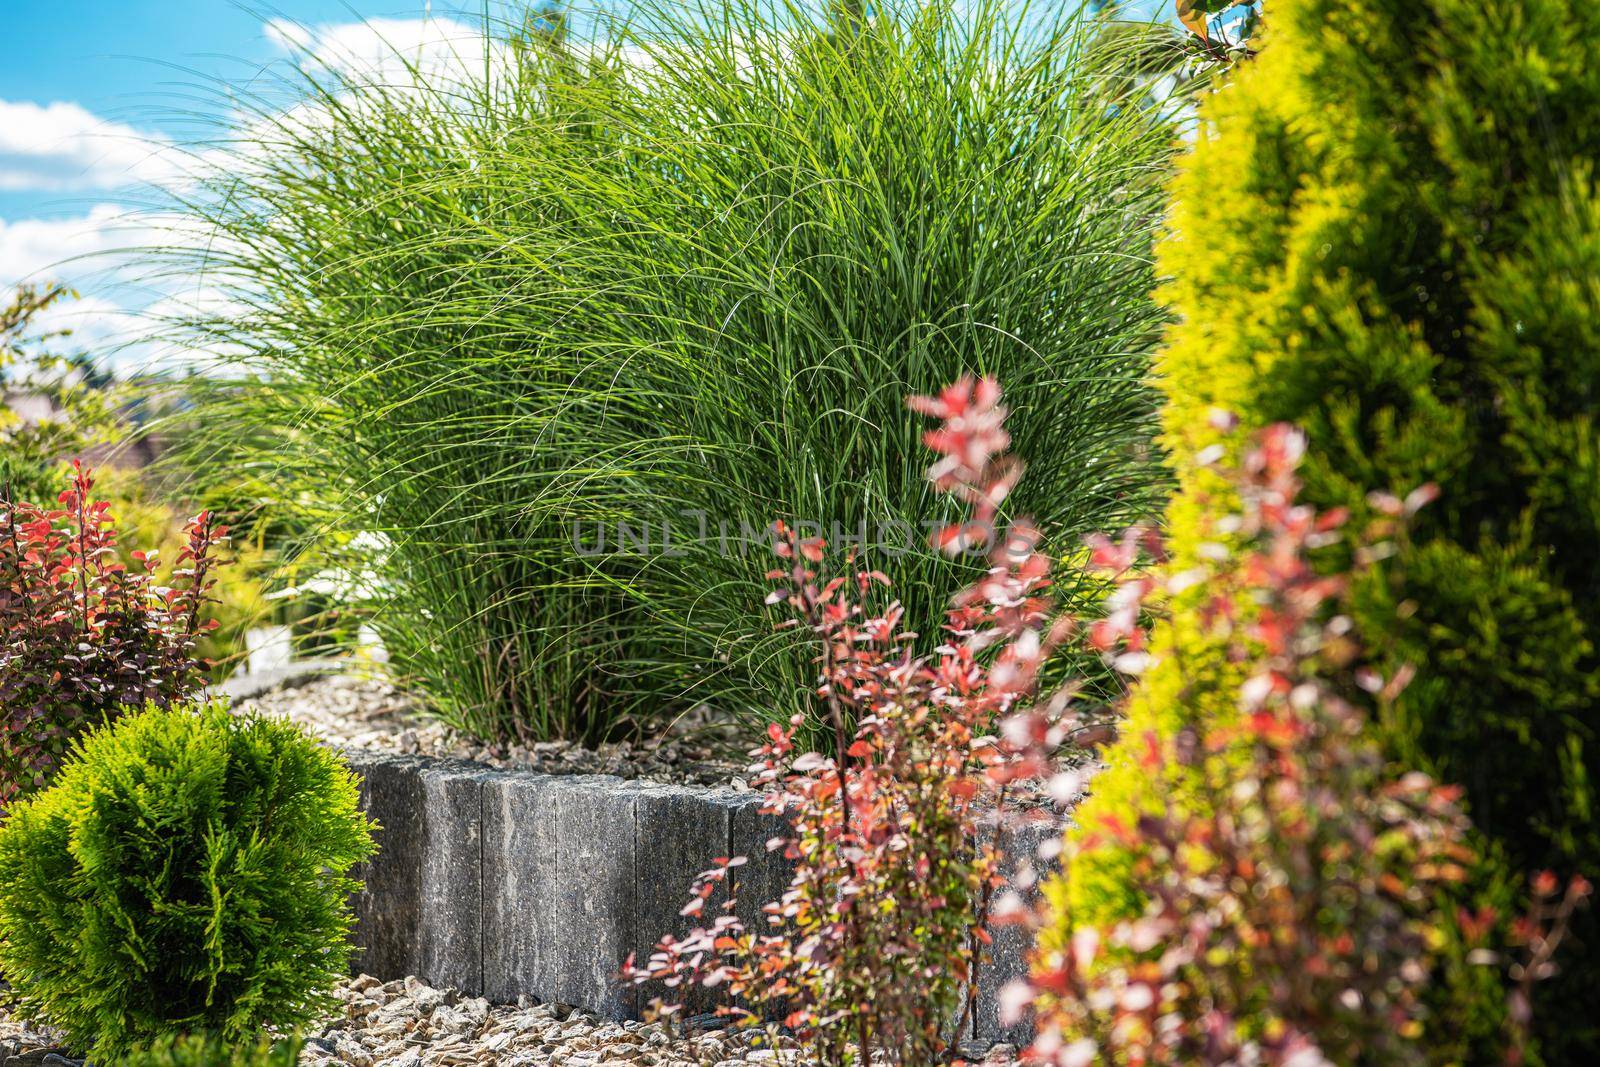 Decorative Garden Grasses by welcomia